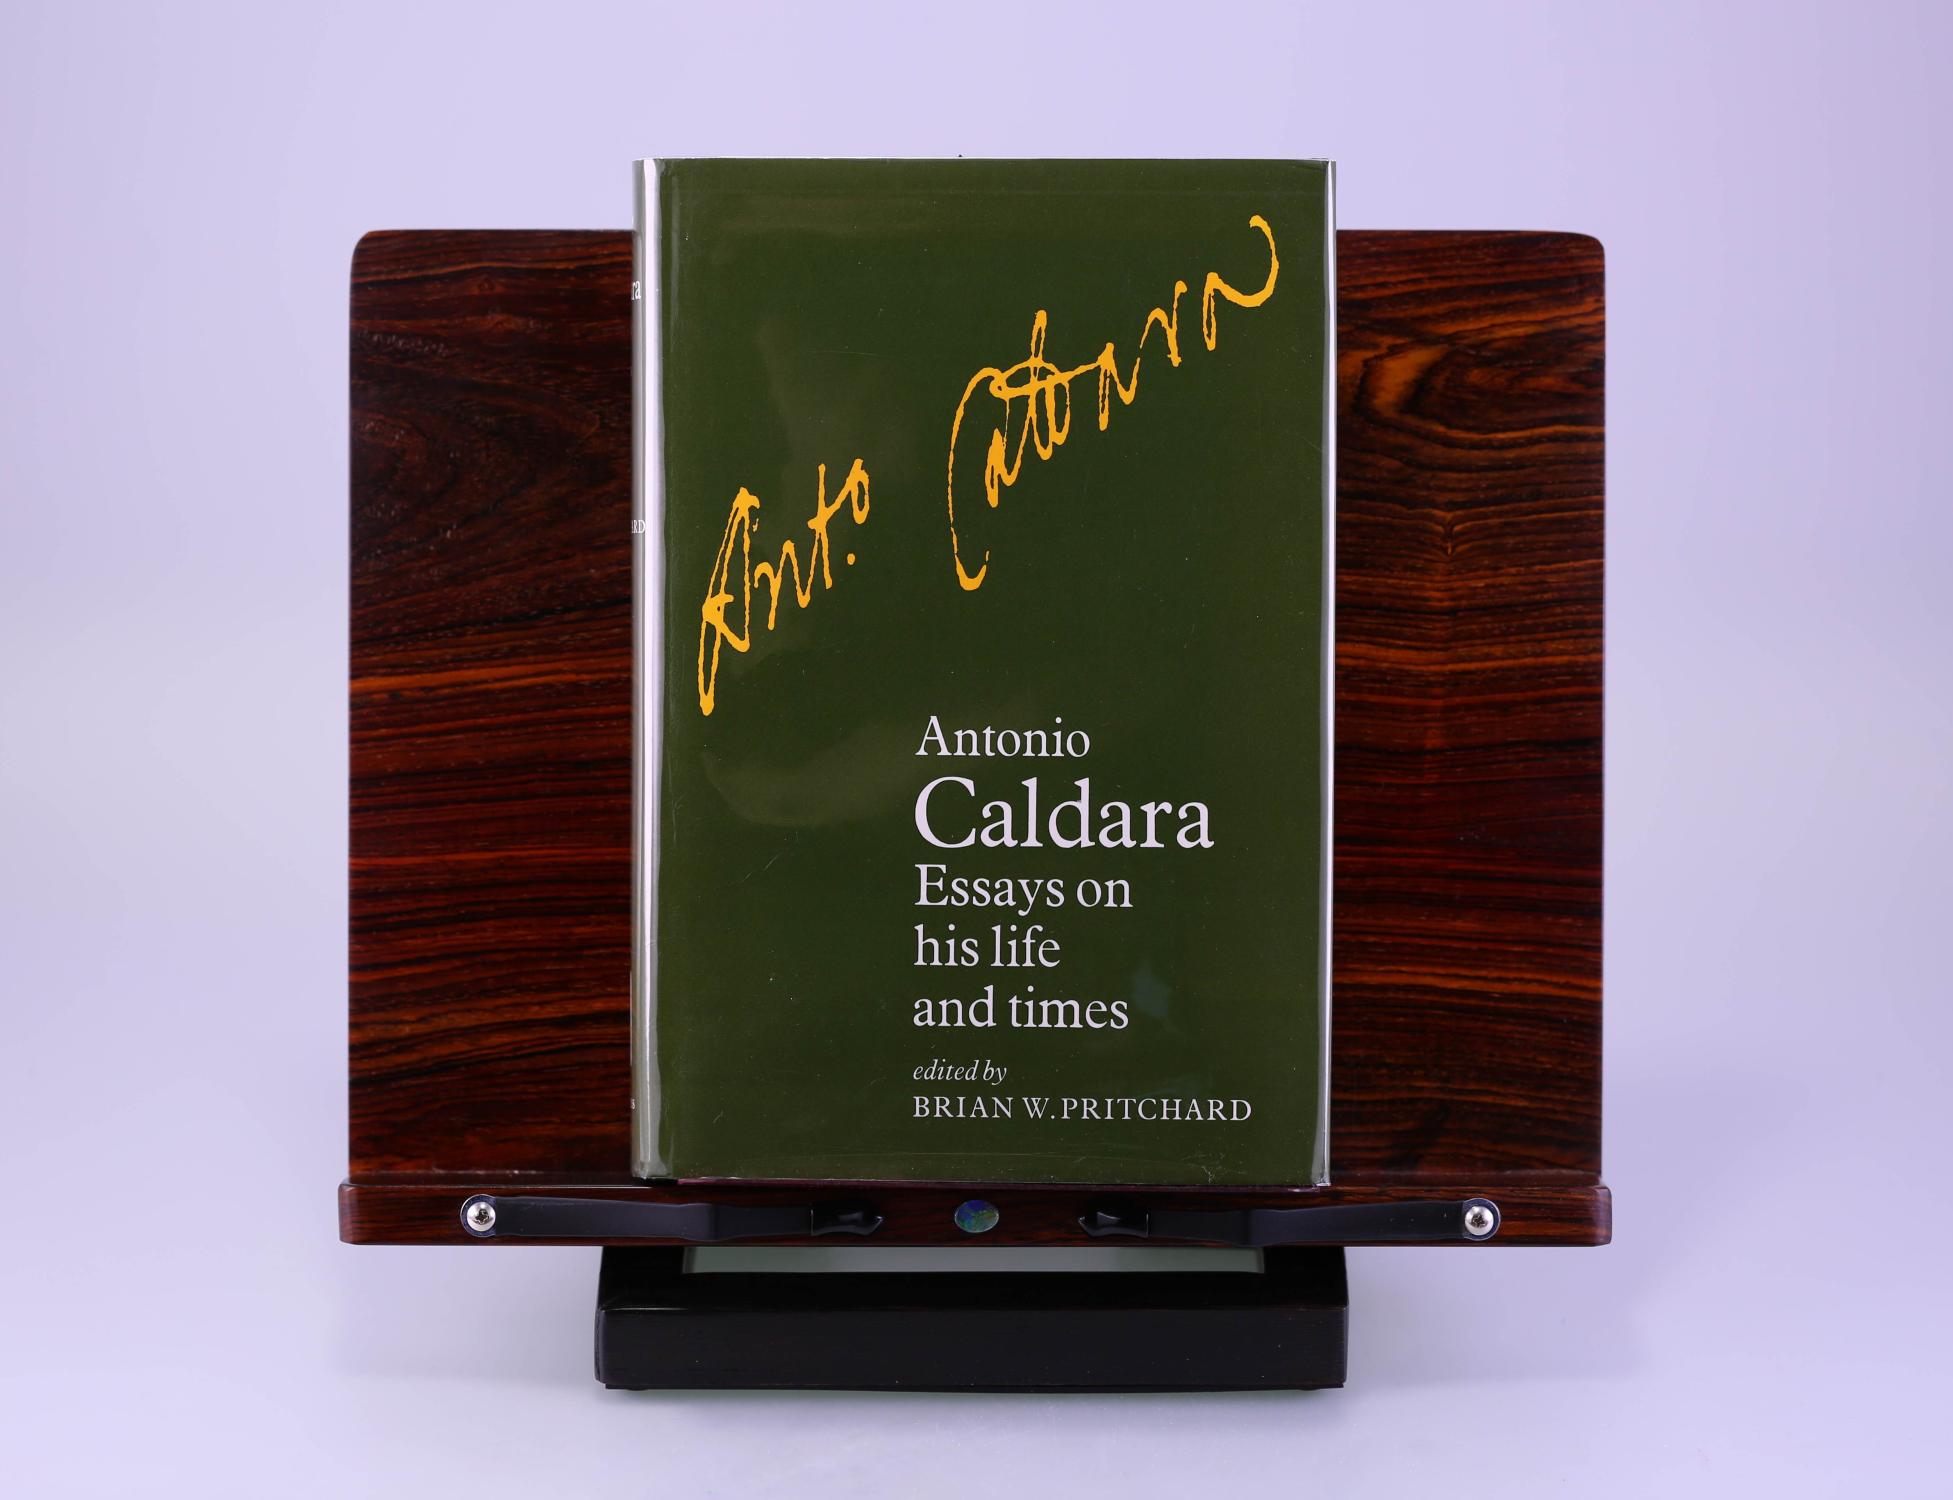 Antonio Caldara: Essays on His Life and Times